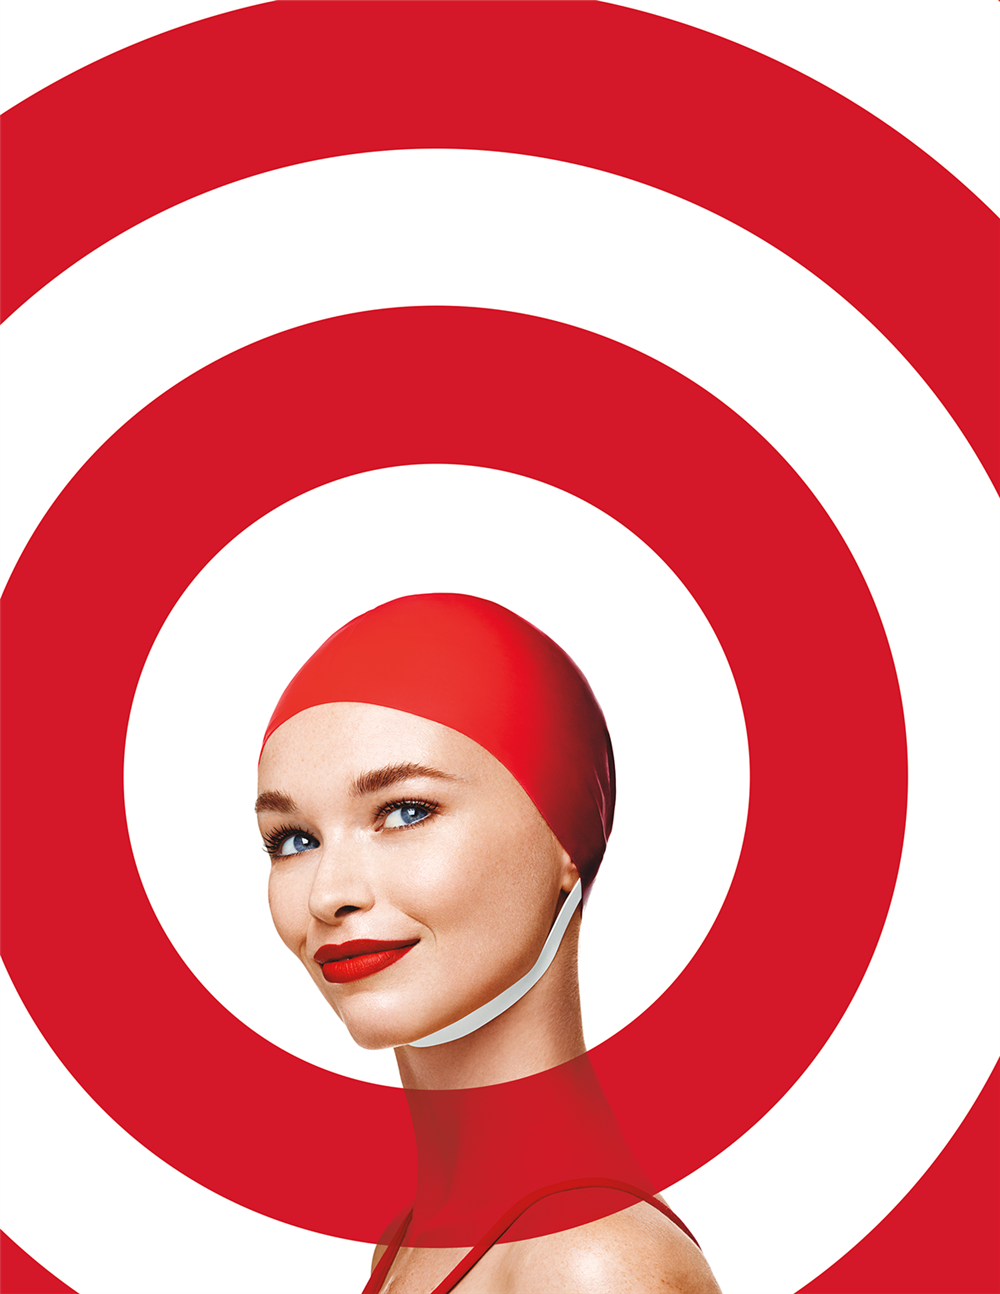 2015 Target Branding